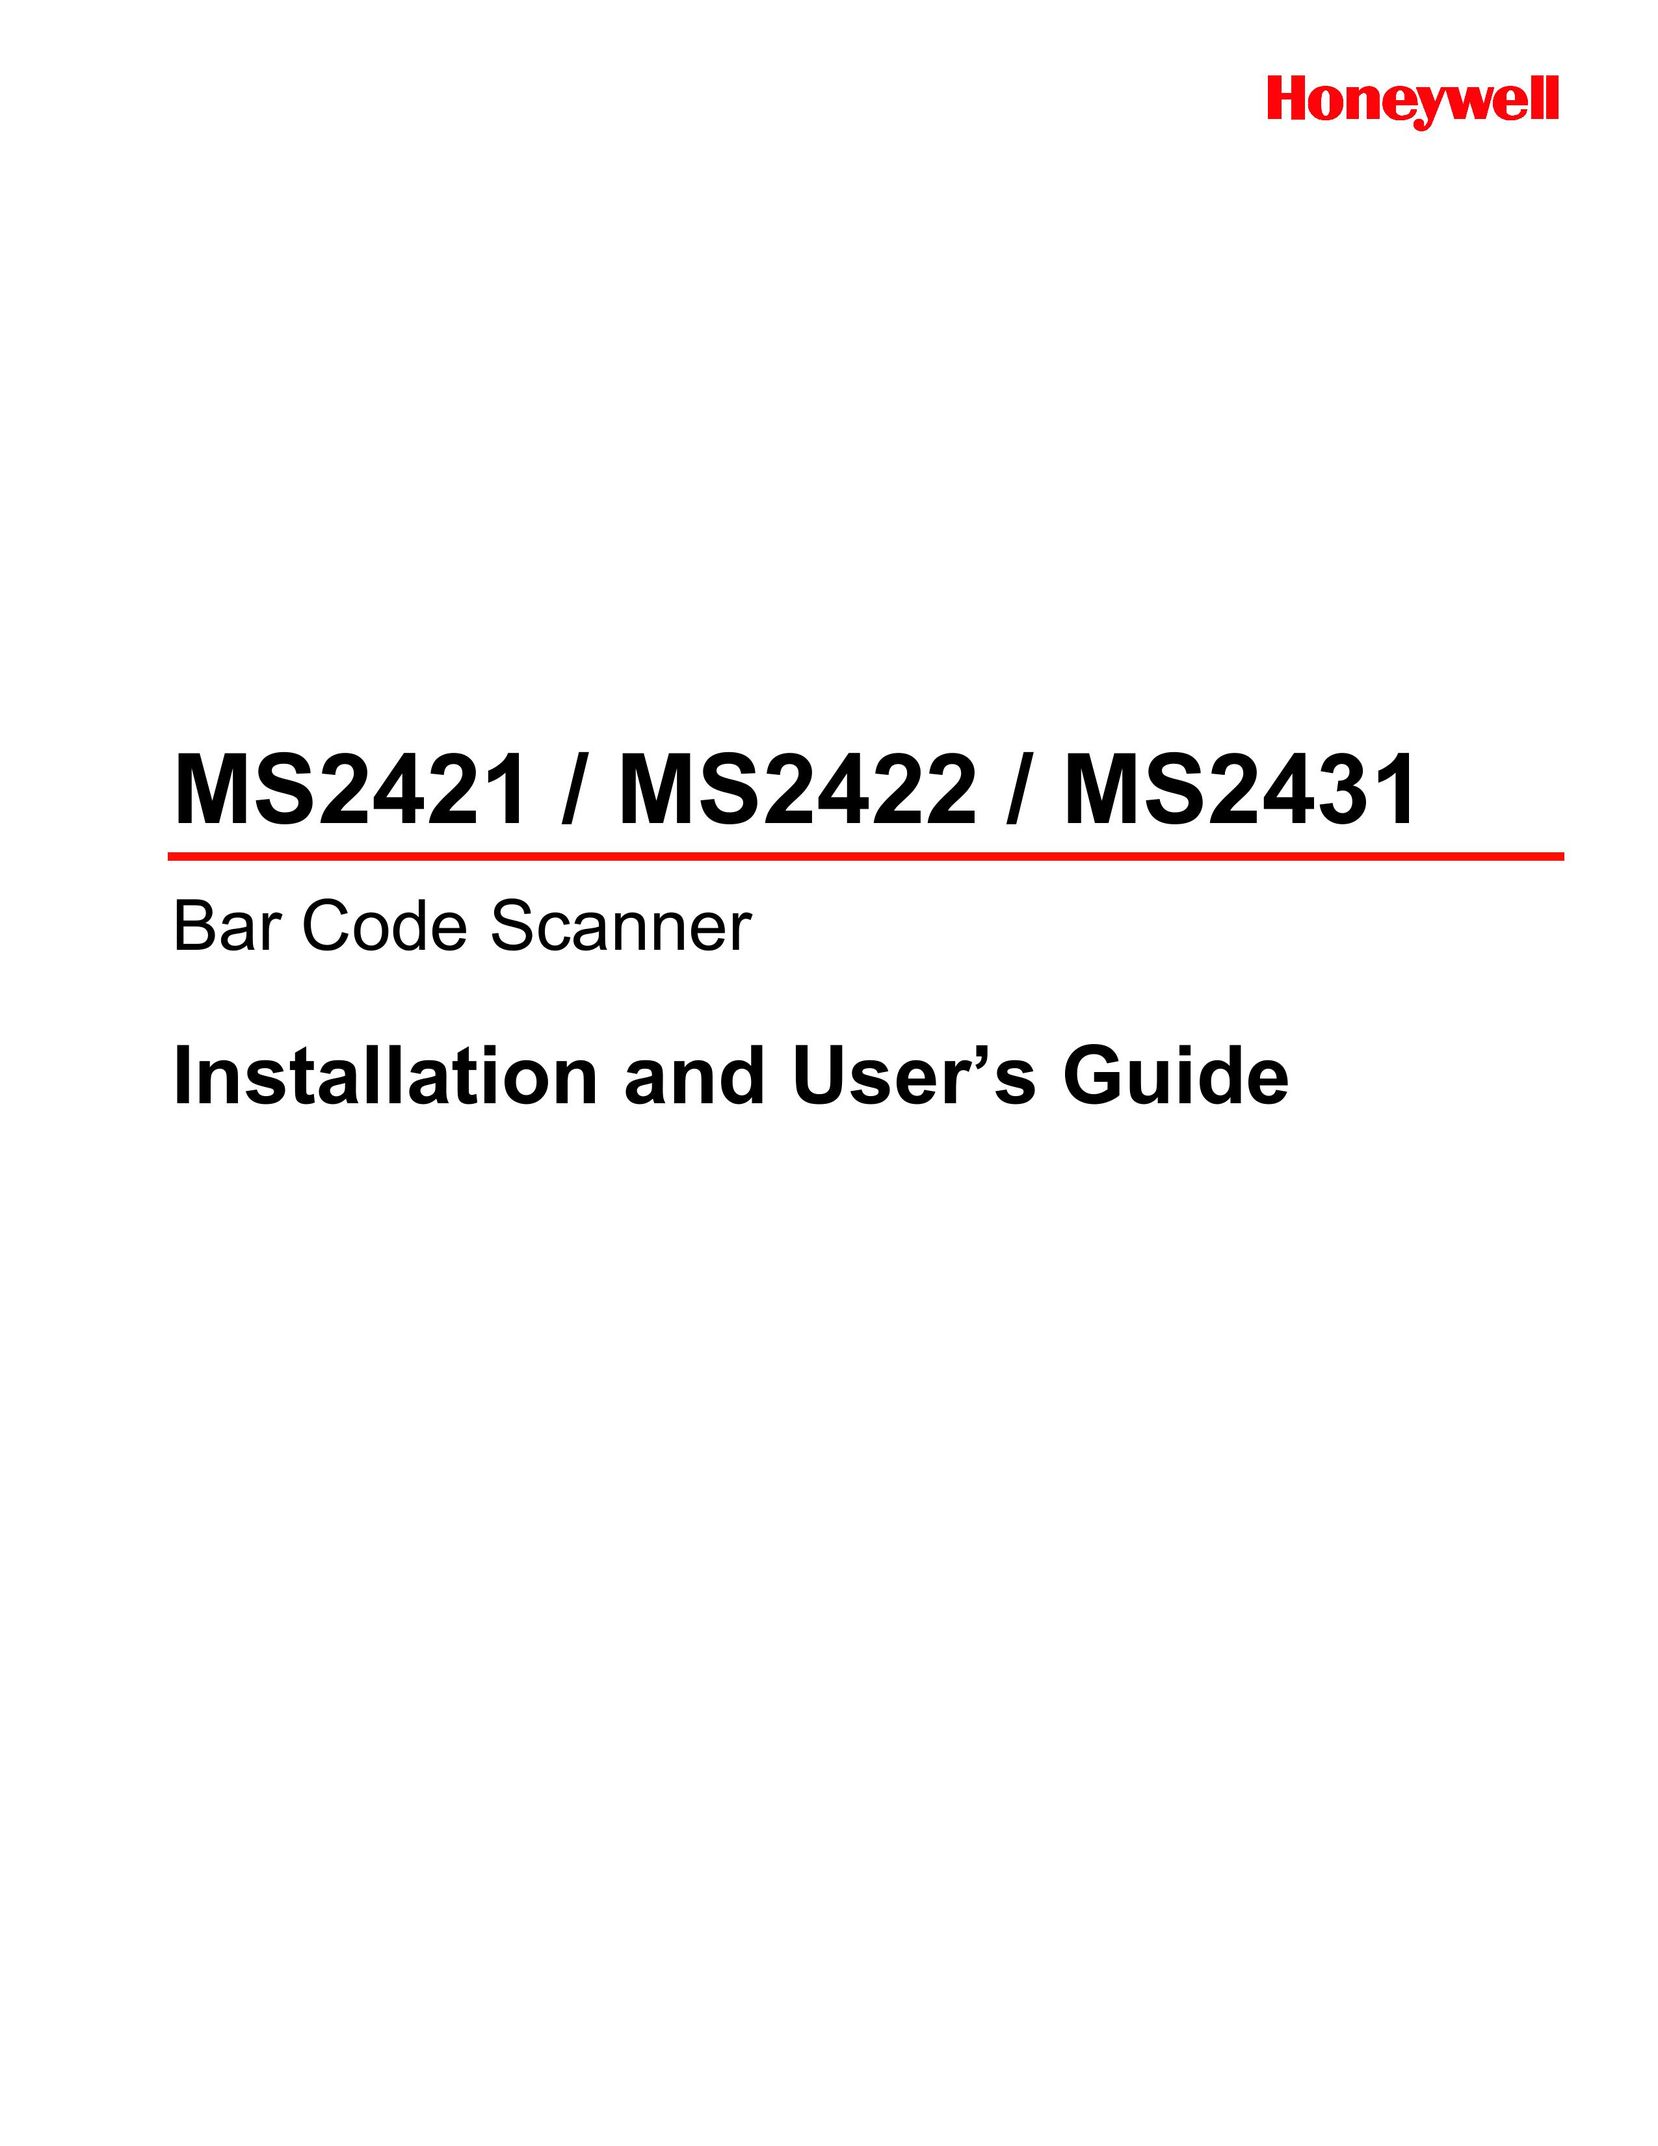 Honeywell MS2431 Barcode Reader User Manual